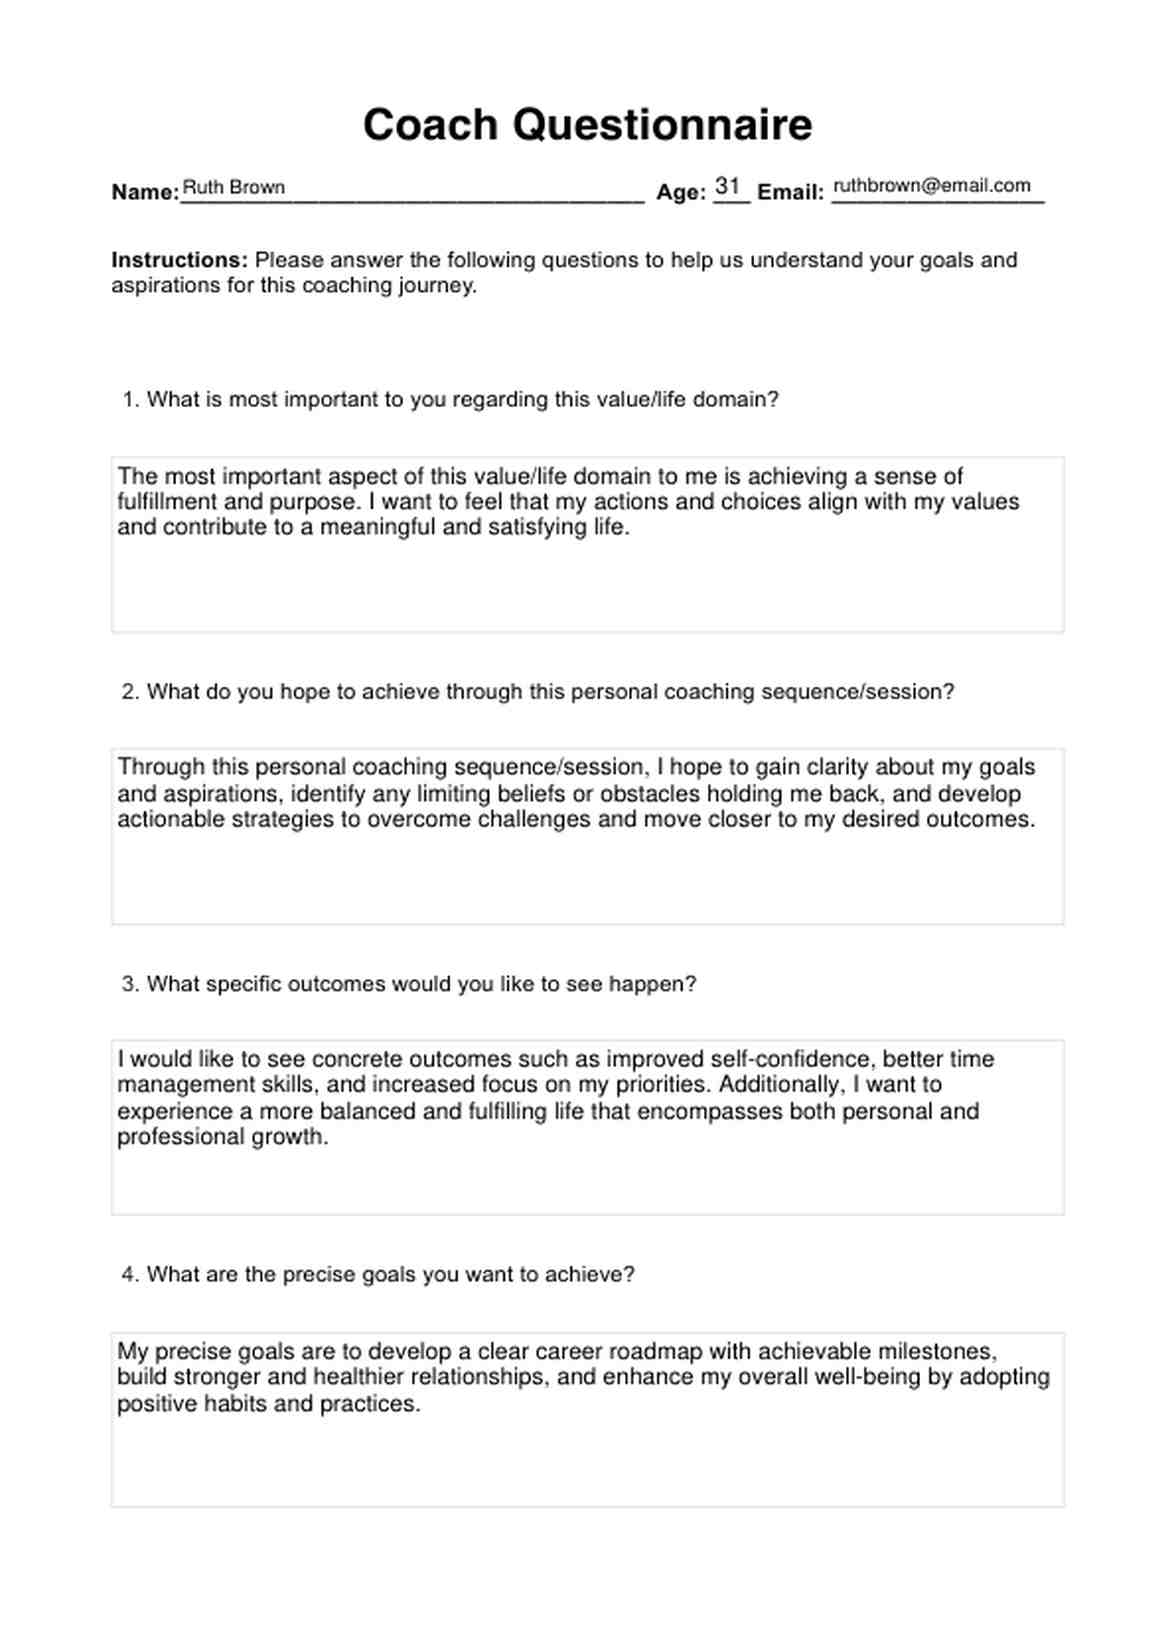 Coach Questionnaire PDF Example